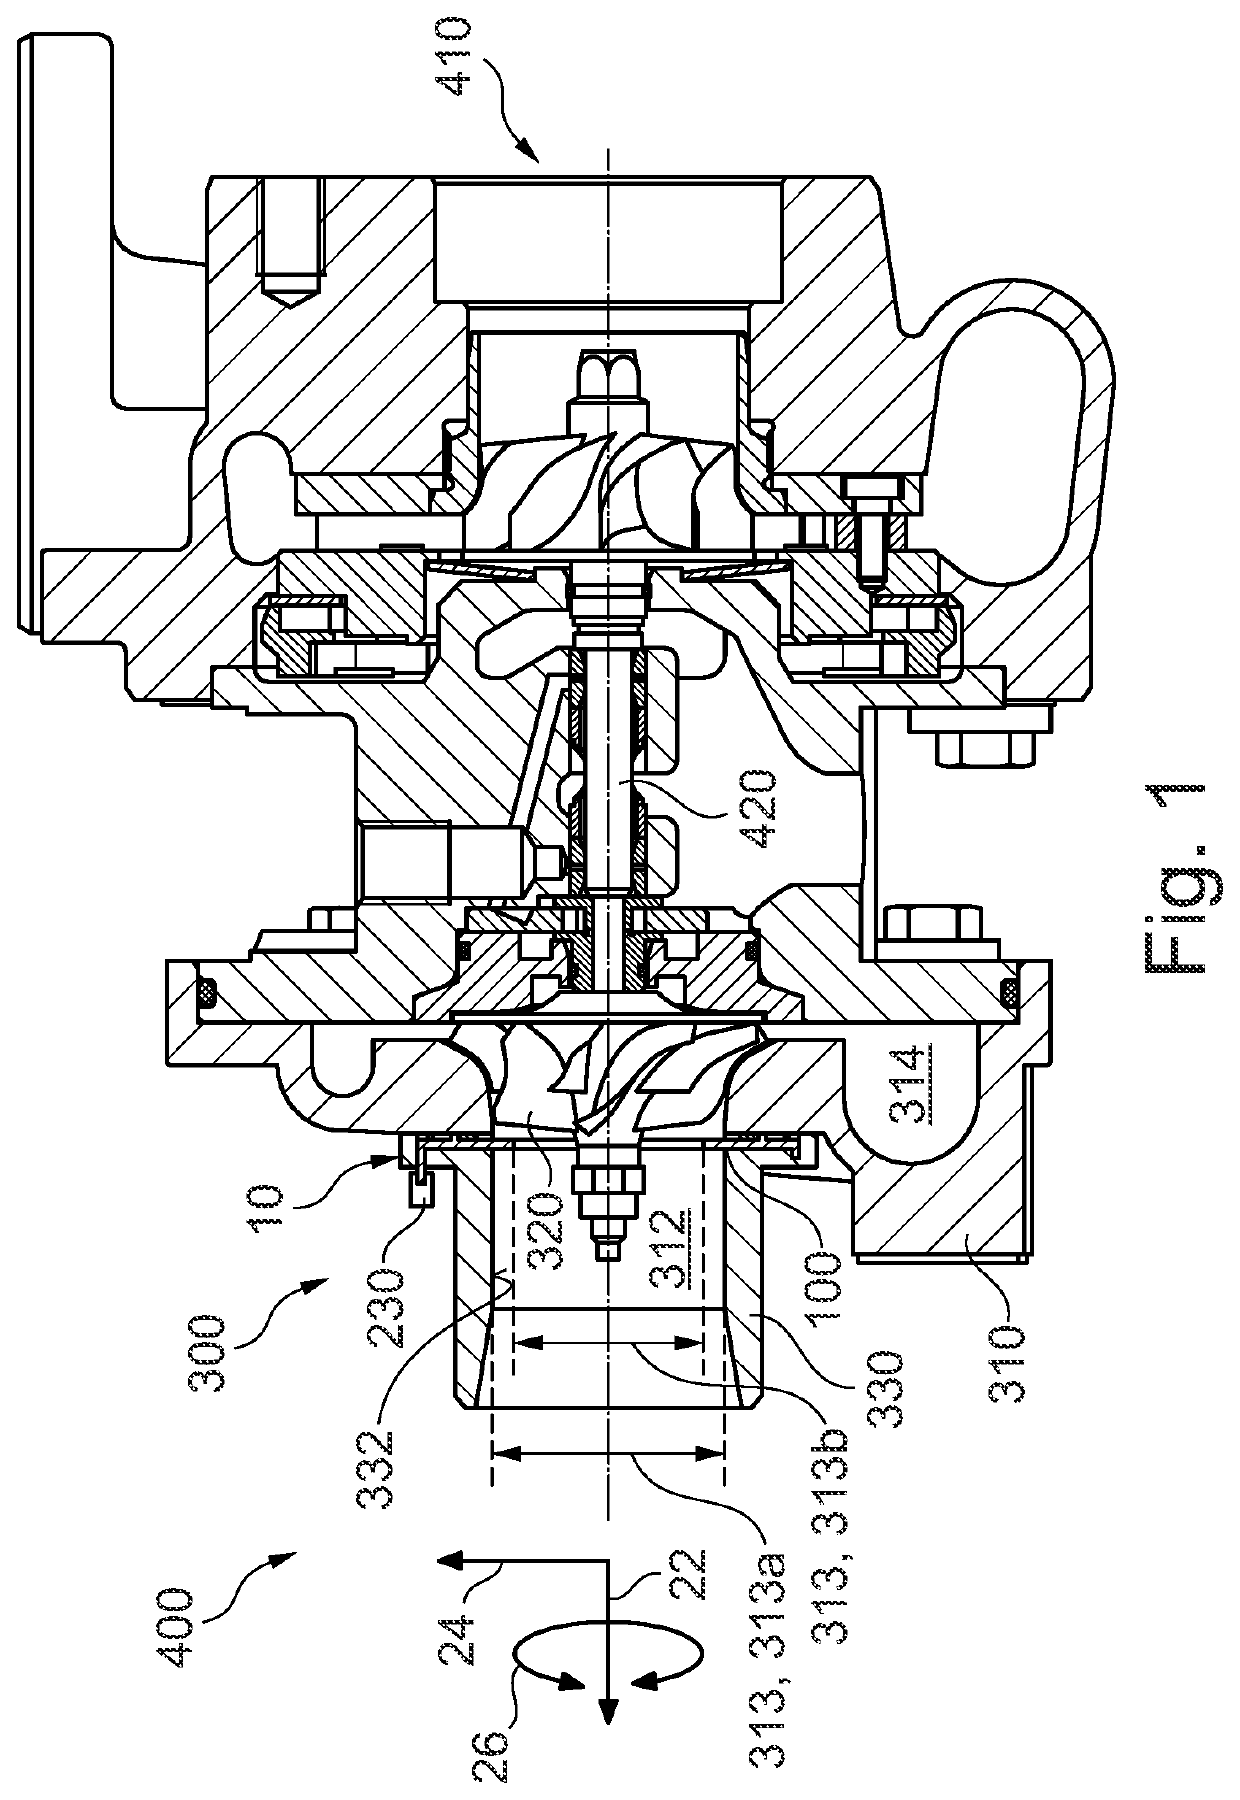 Compressor having adjustment mechanism